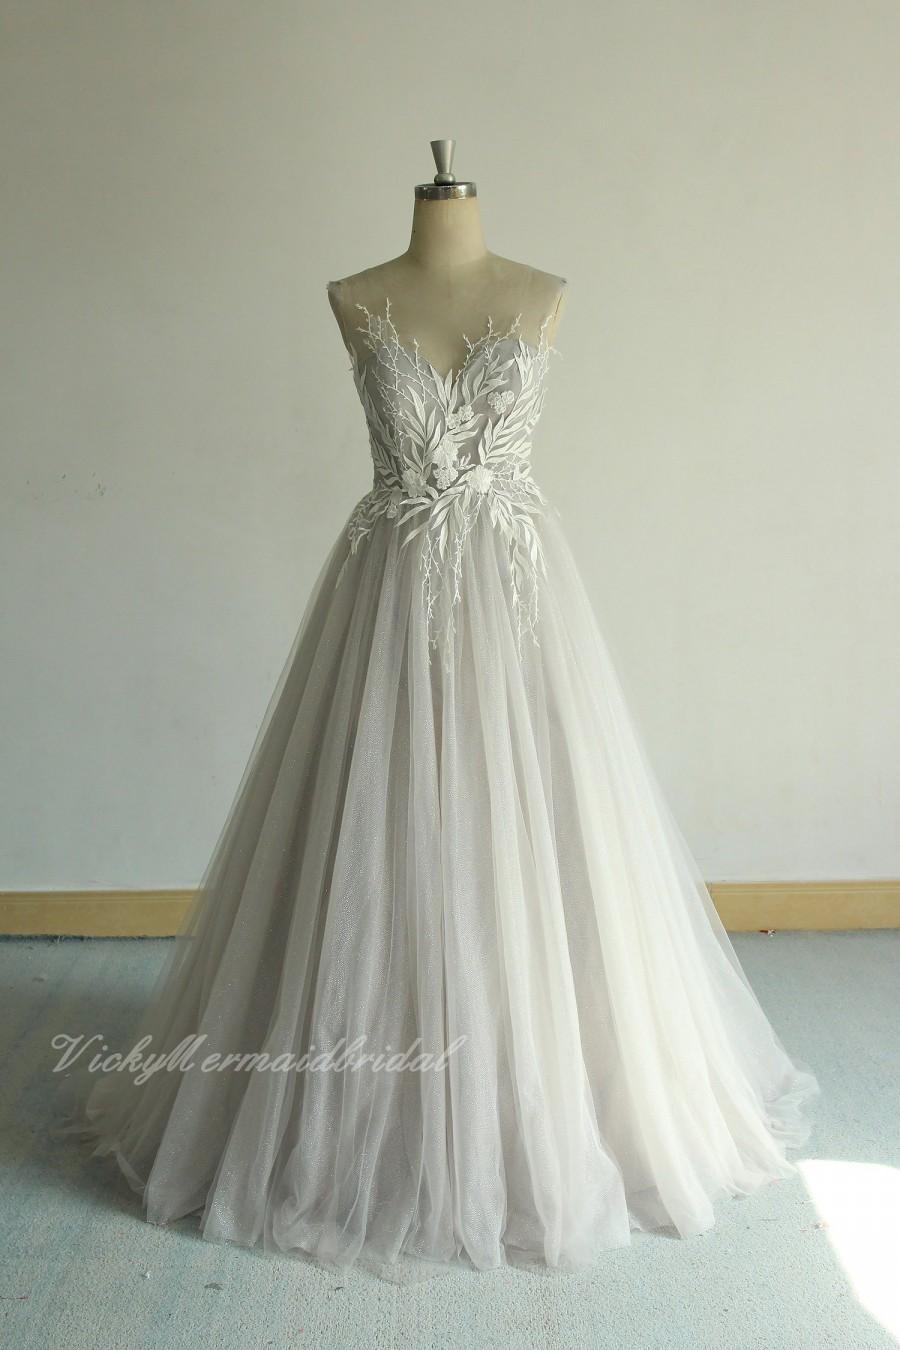 زفاف - Very elegant silver tulle lace wedding dress, blingbling prom dress, A line bohomian wedding dress with illusion neckline and chapel train